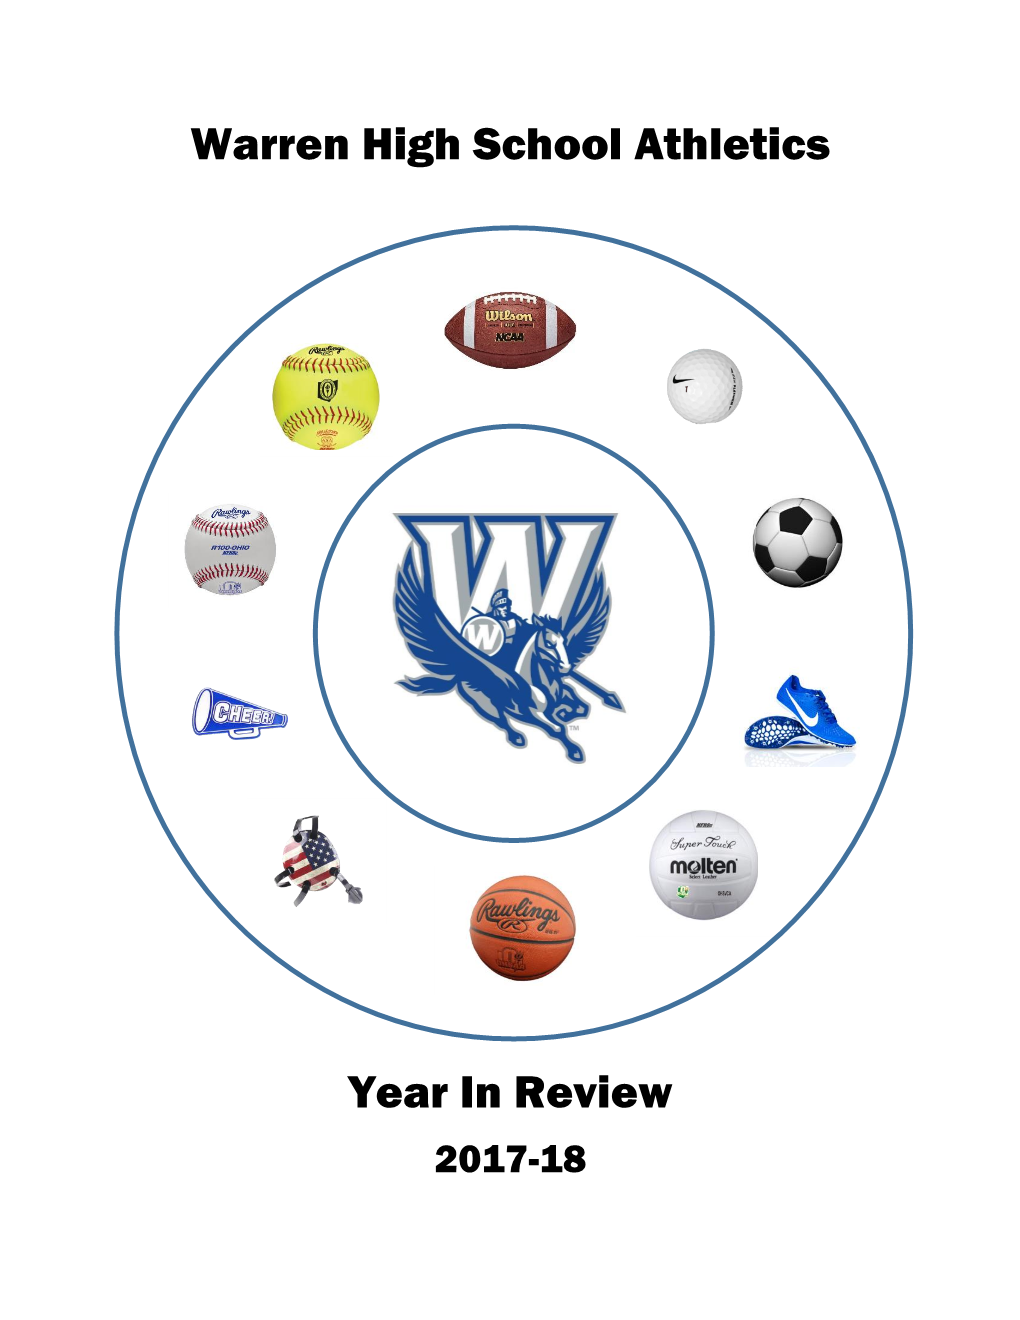 Warren High School Athletics Year in Review